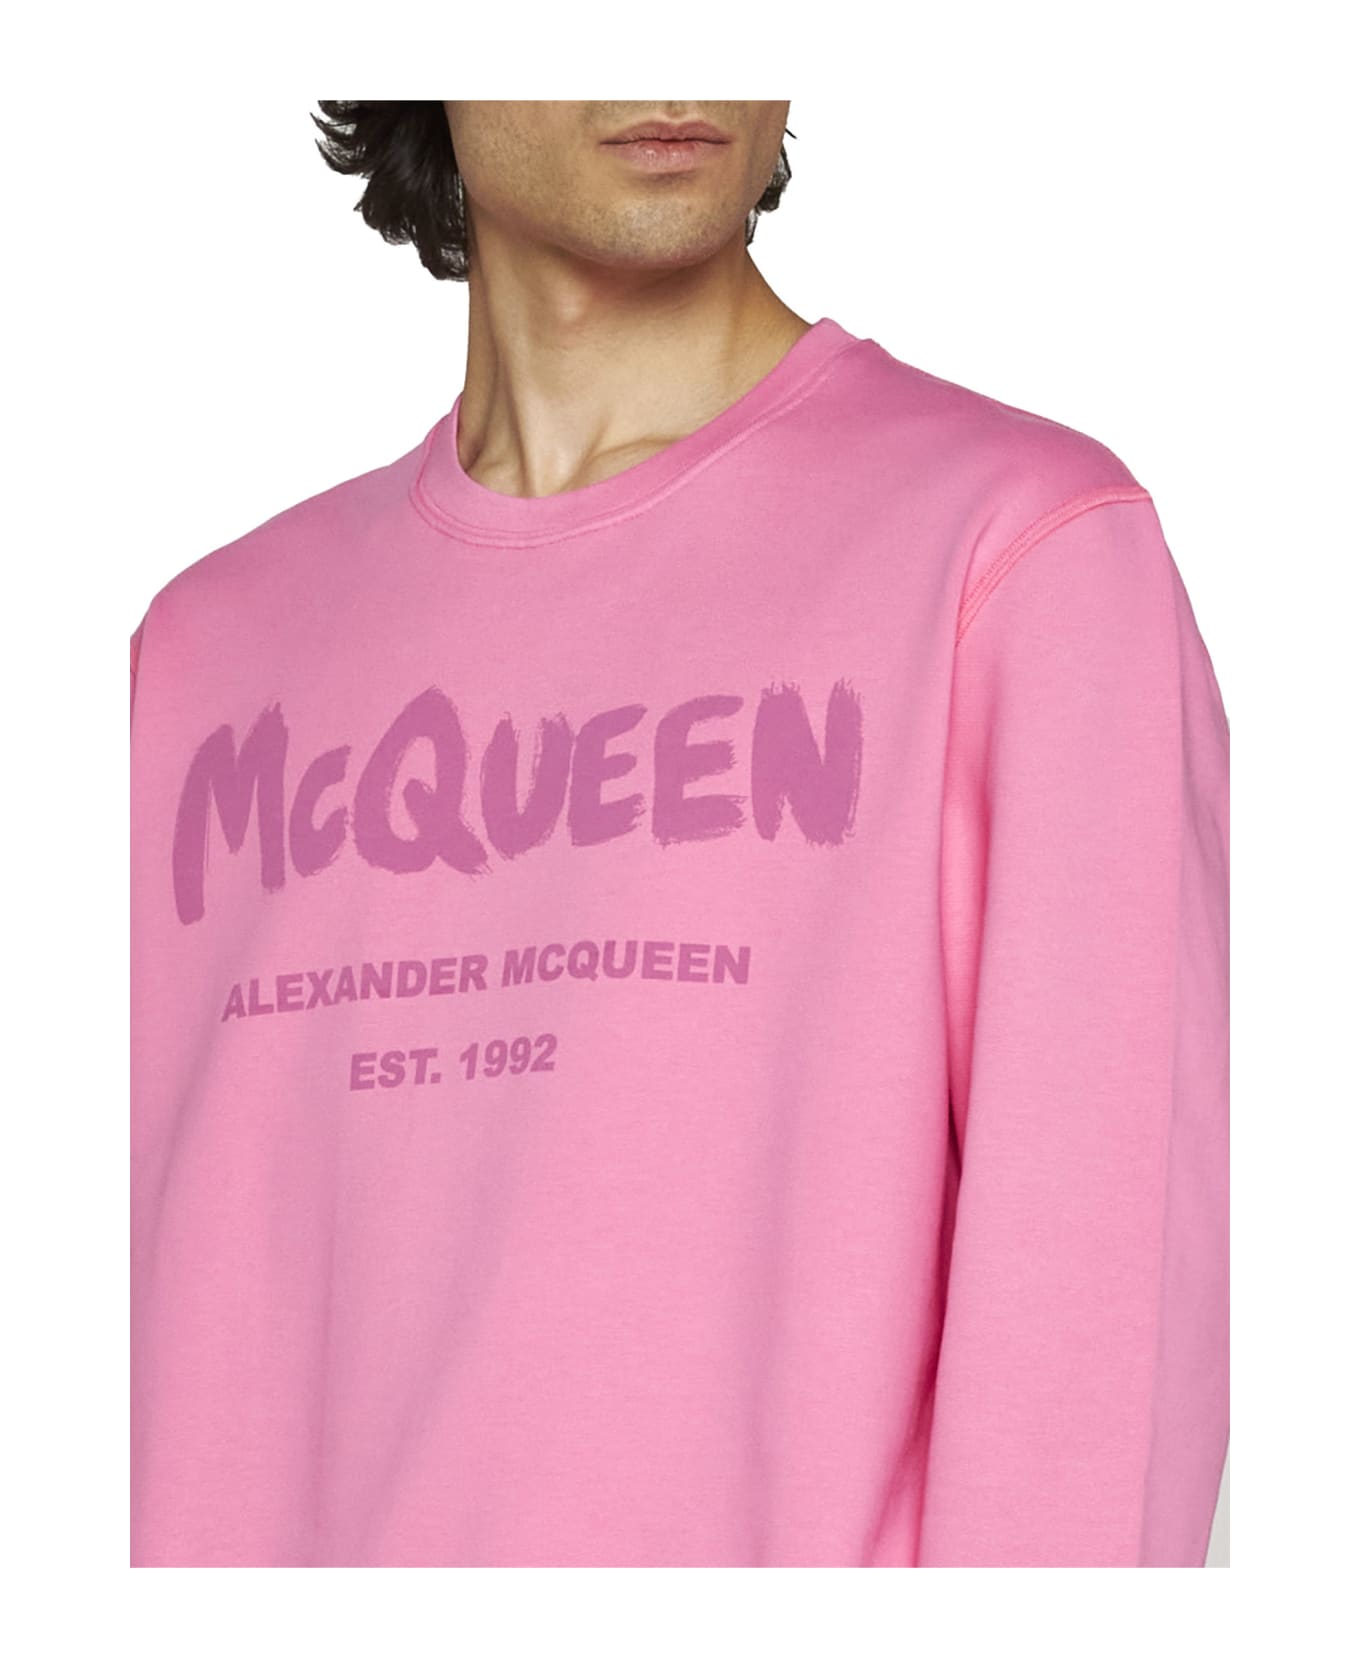 Alexander McQueen Fleece - Sugar pink mix